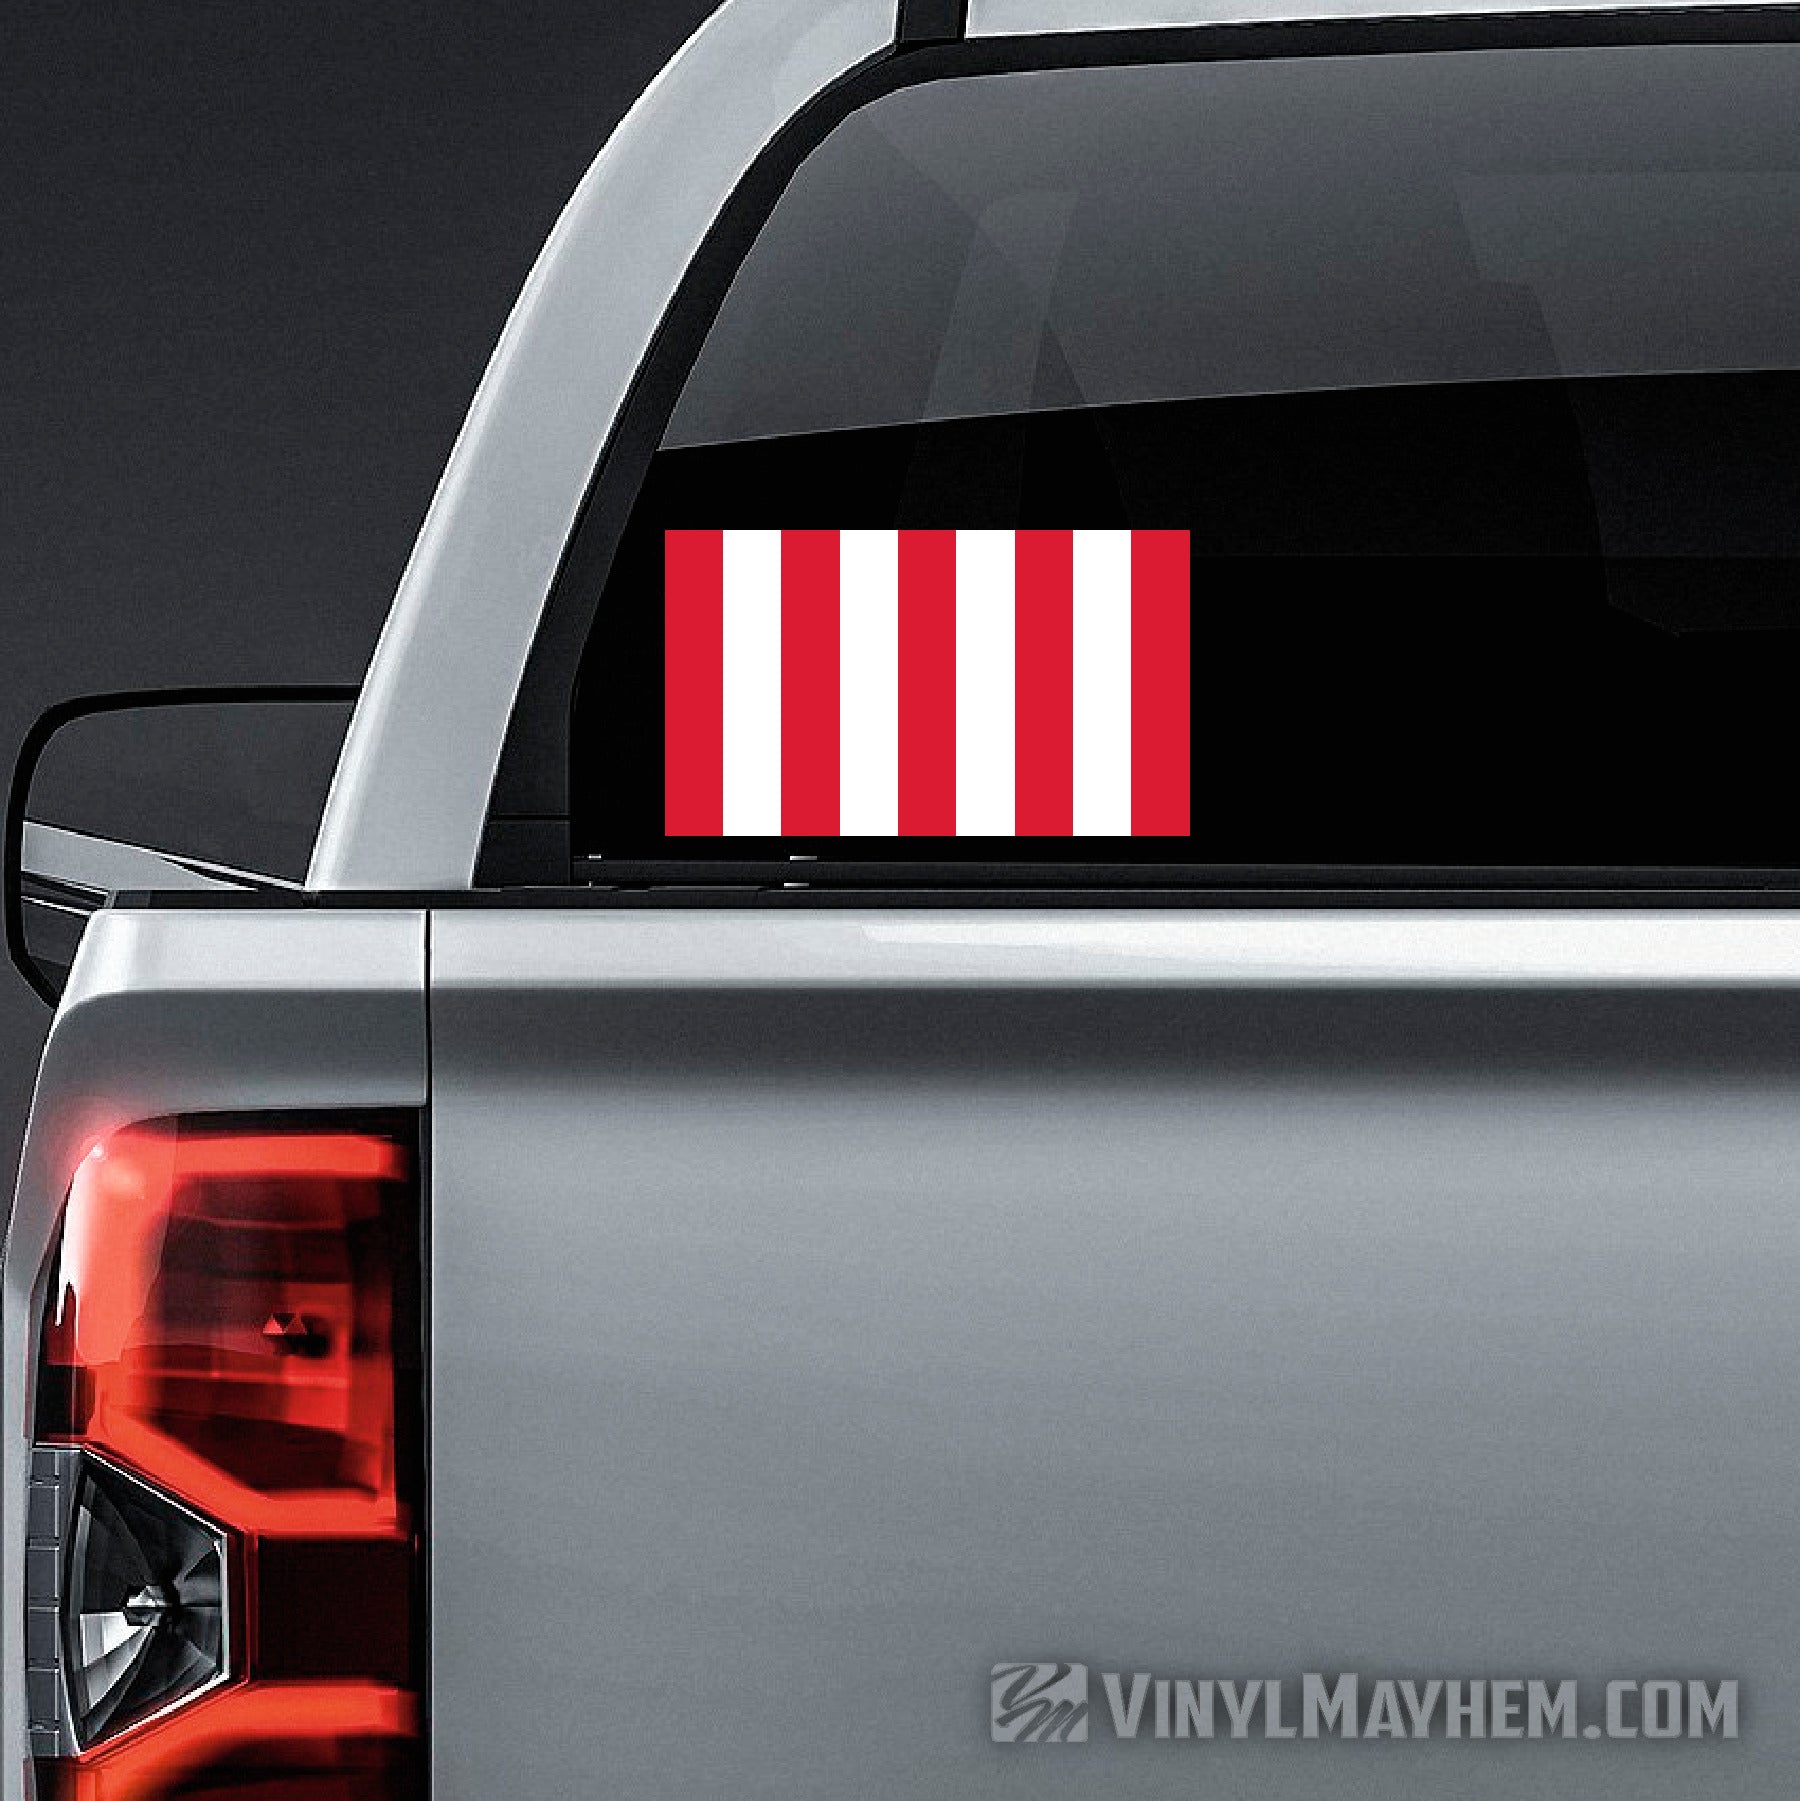 Sons of Liberty American Revolution flag sticker